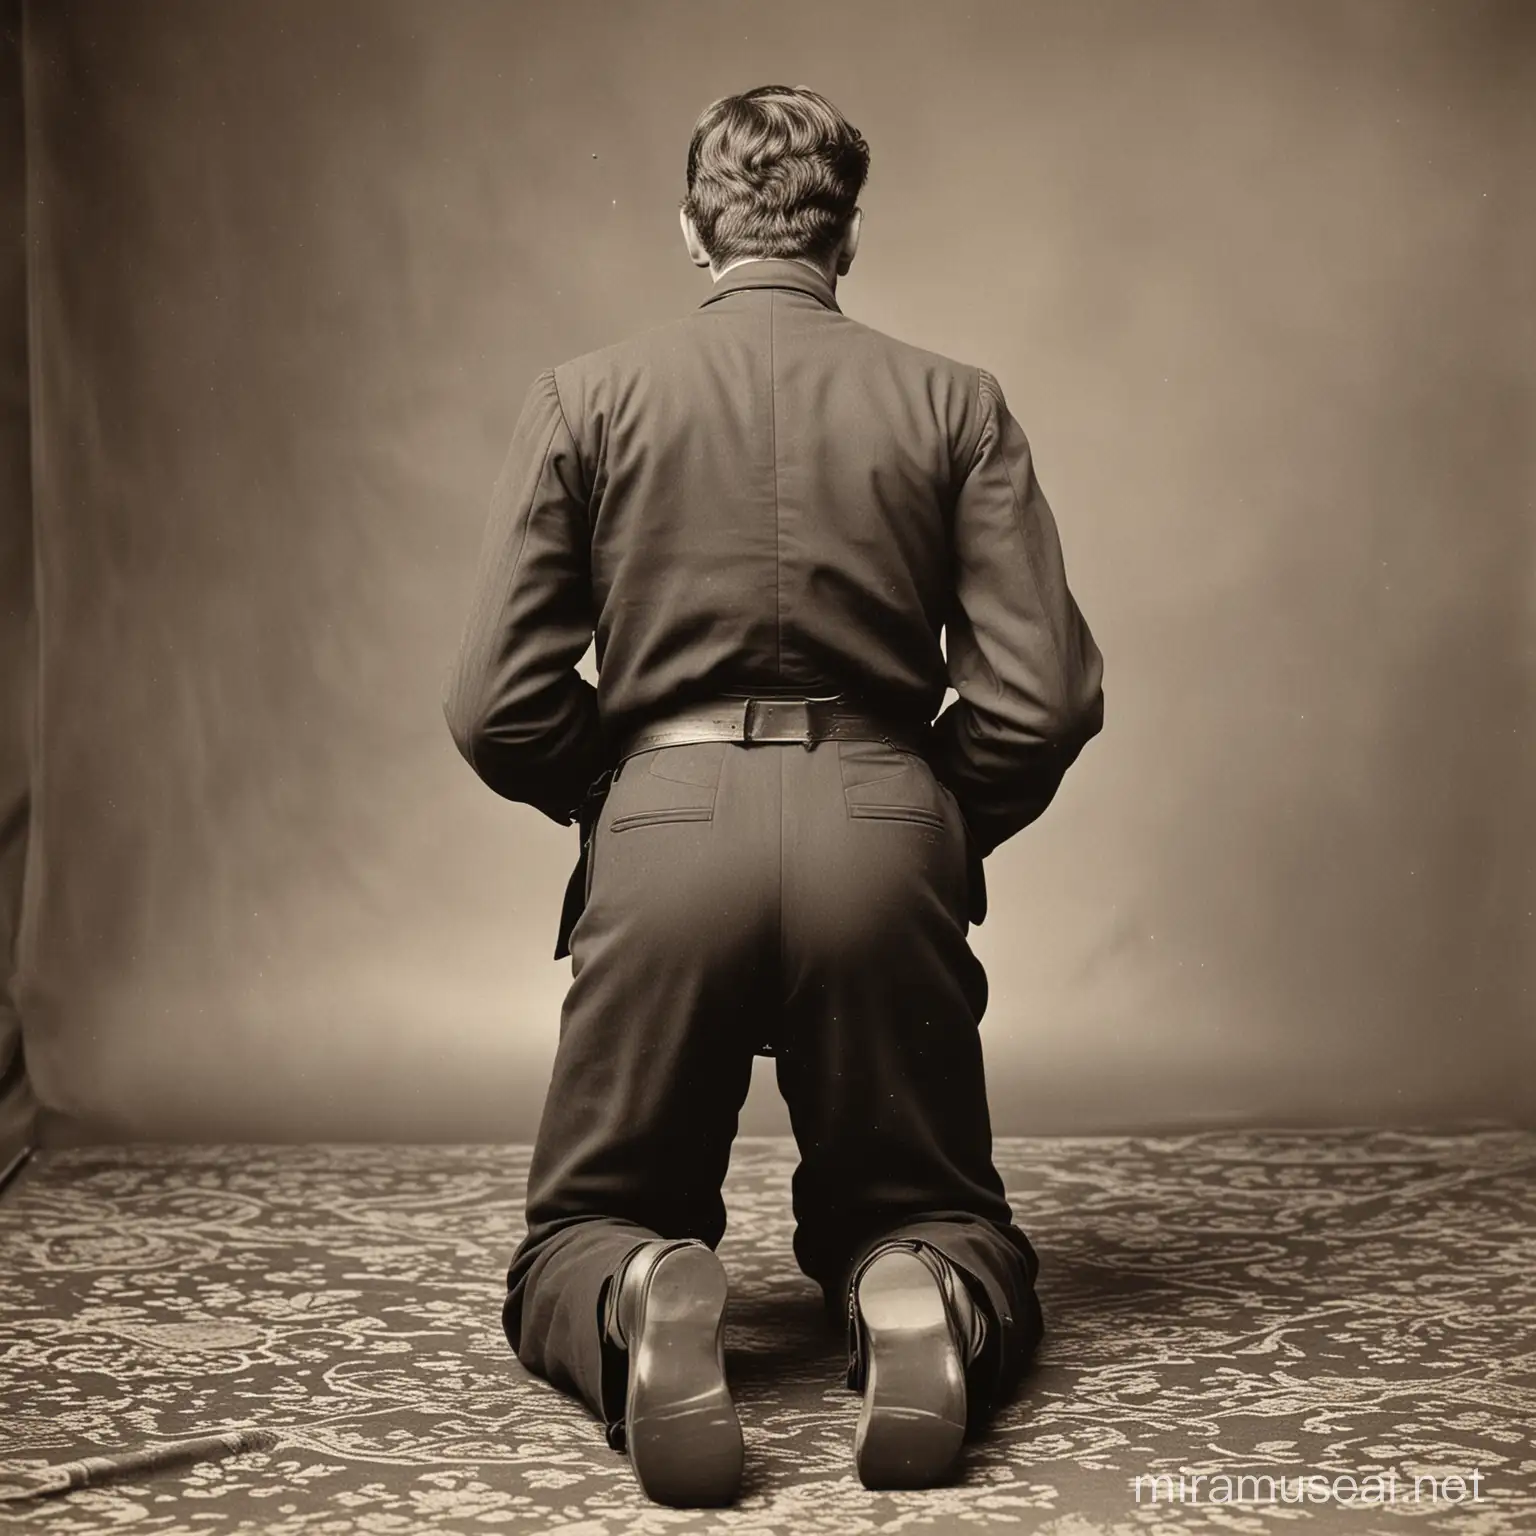 19th Century Monochrome Portrait of Man Kneeling in Photo Studio